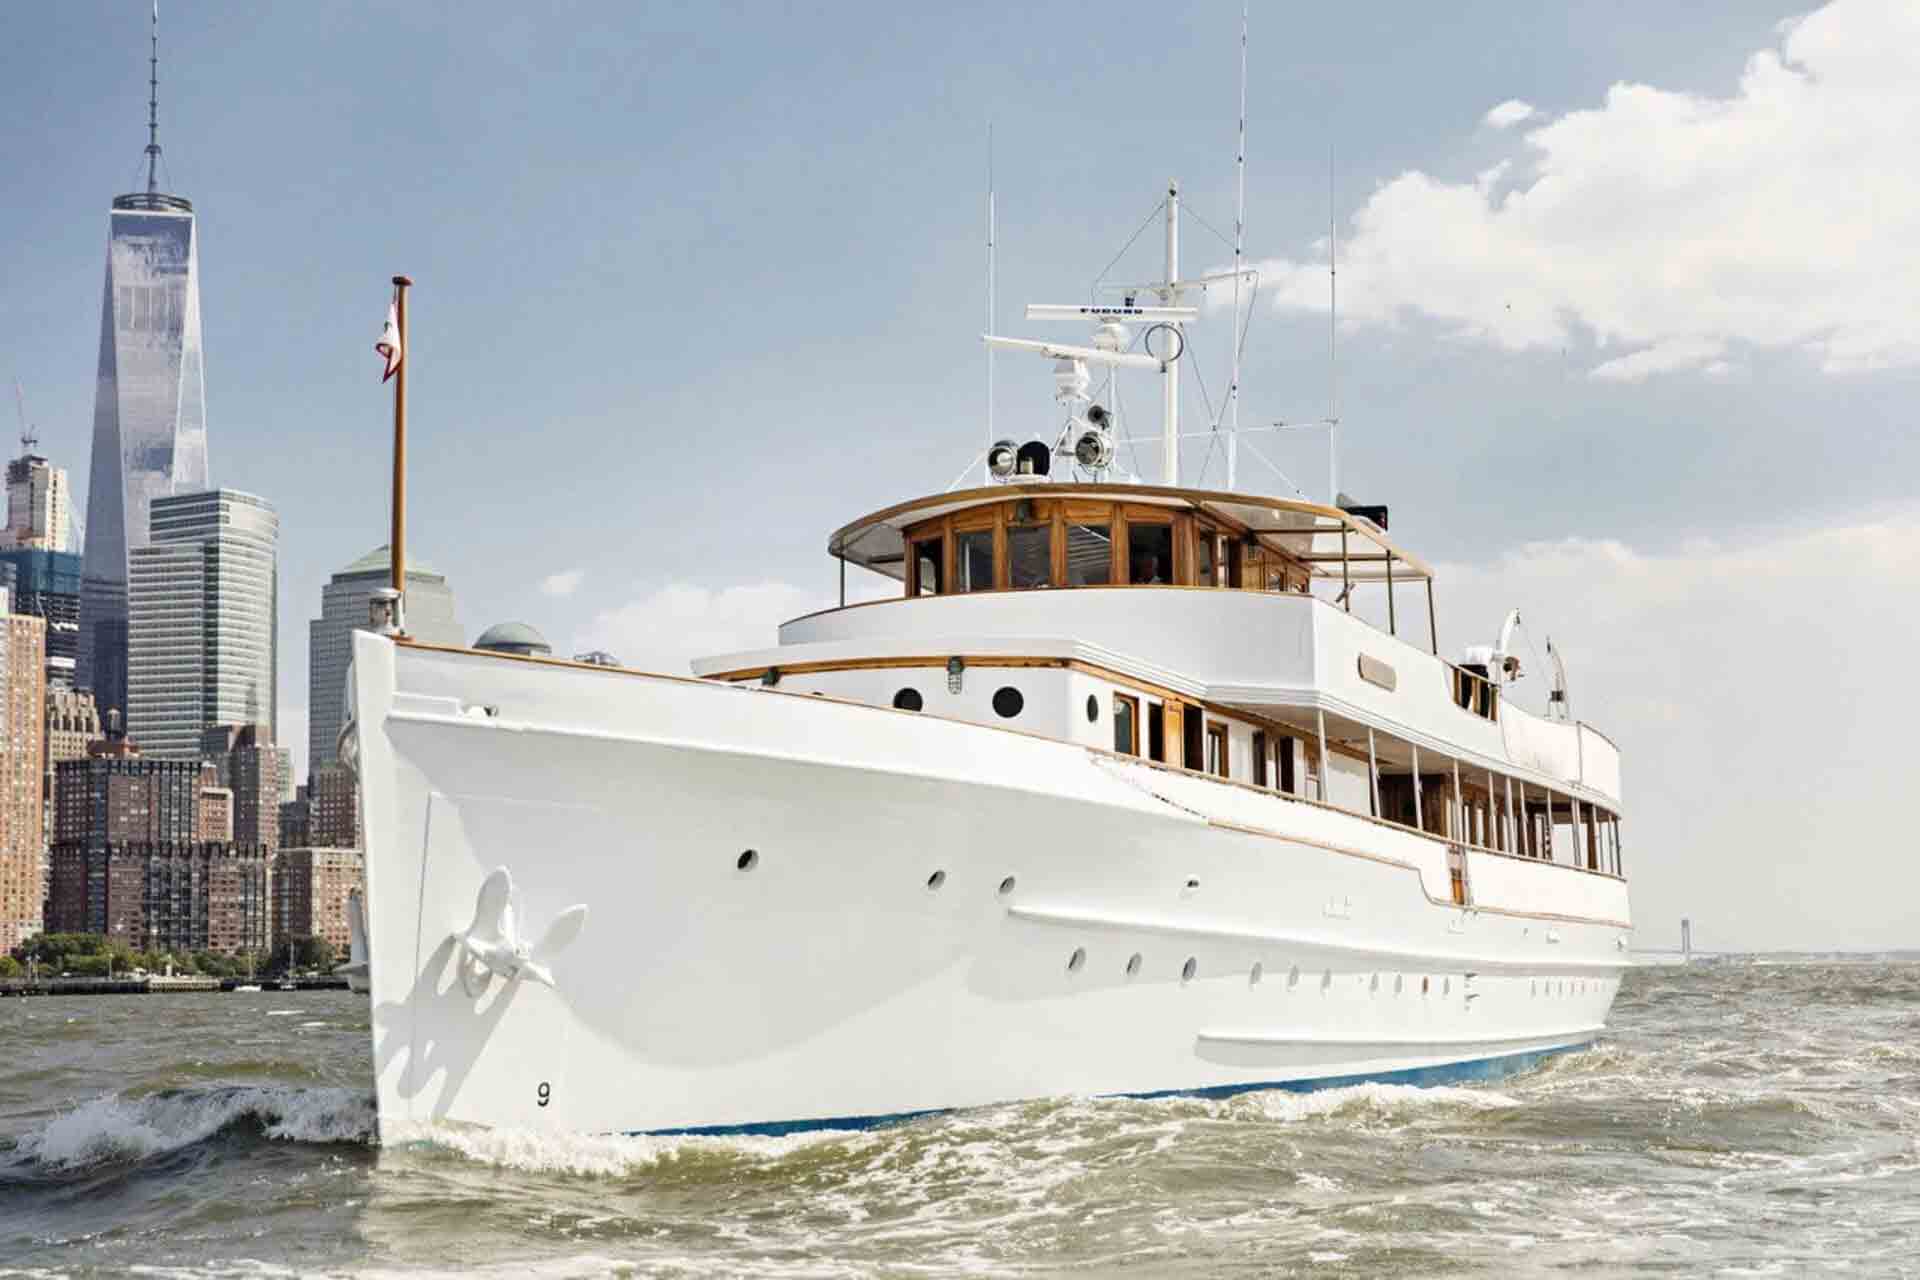 122' Hamptons Event Yacht Image 1